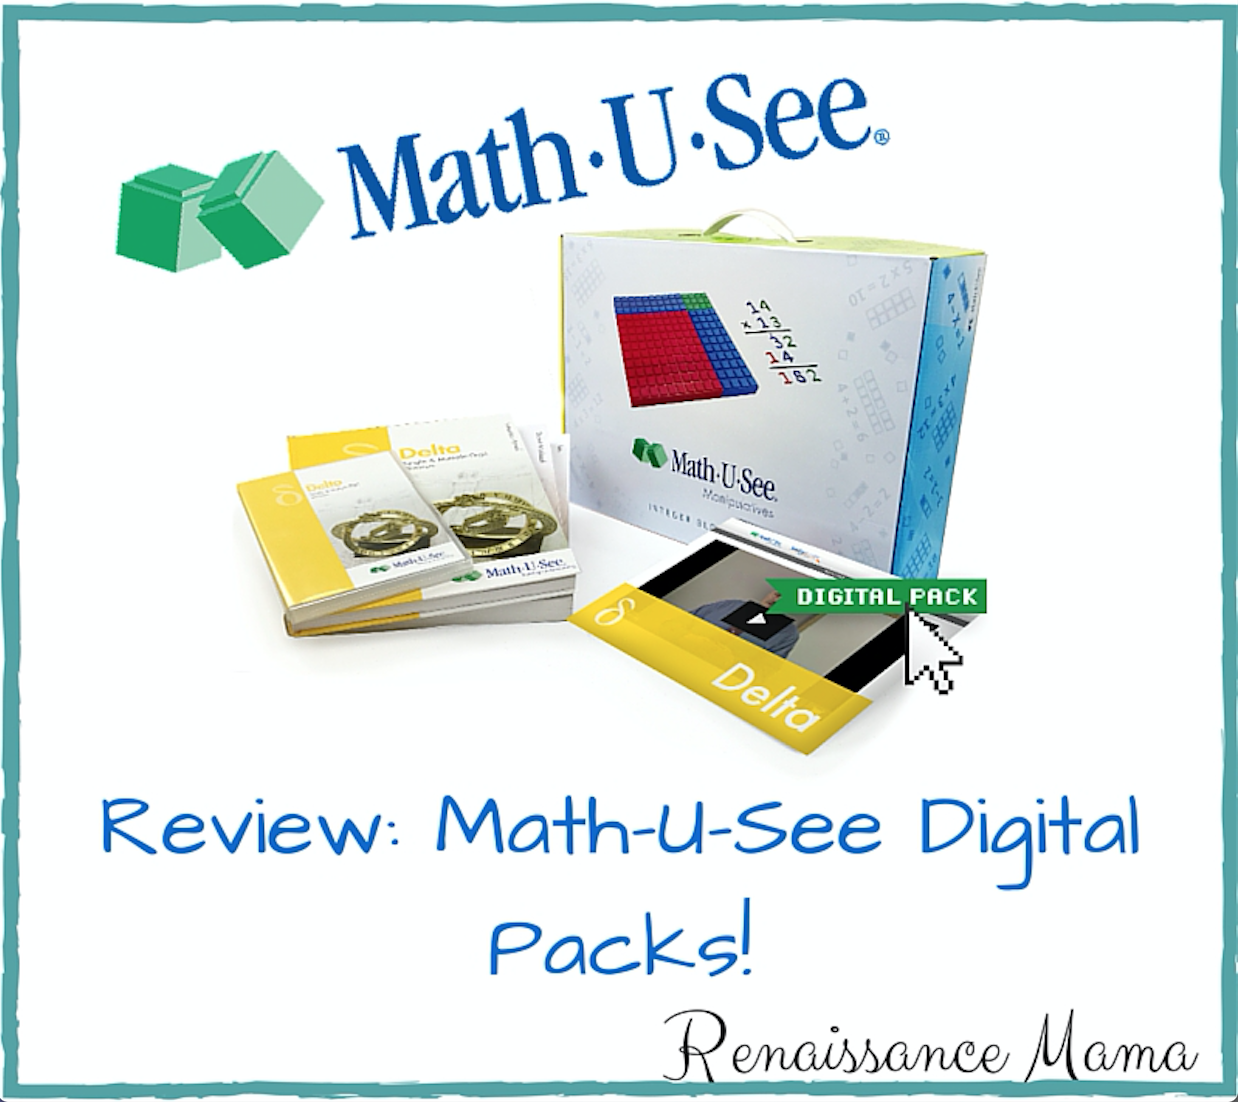 math-u-see review